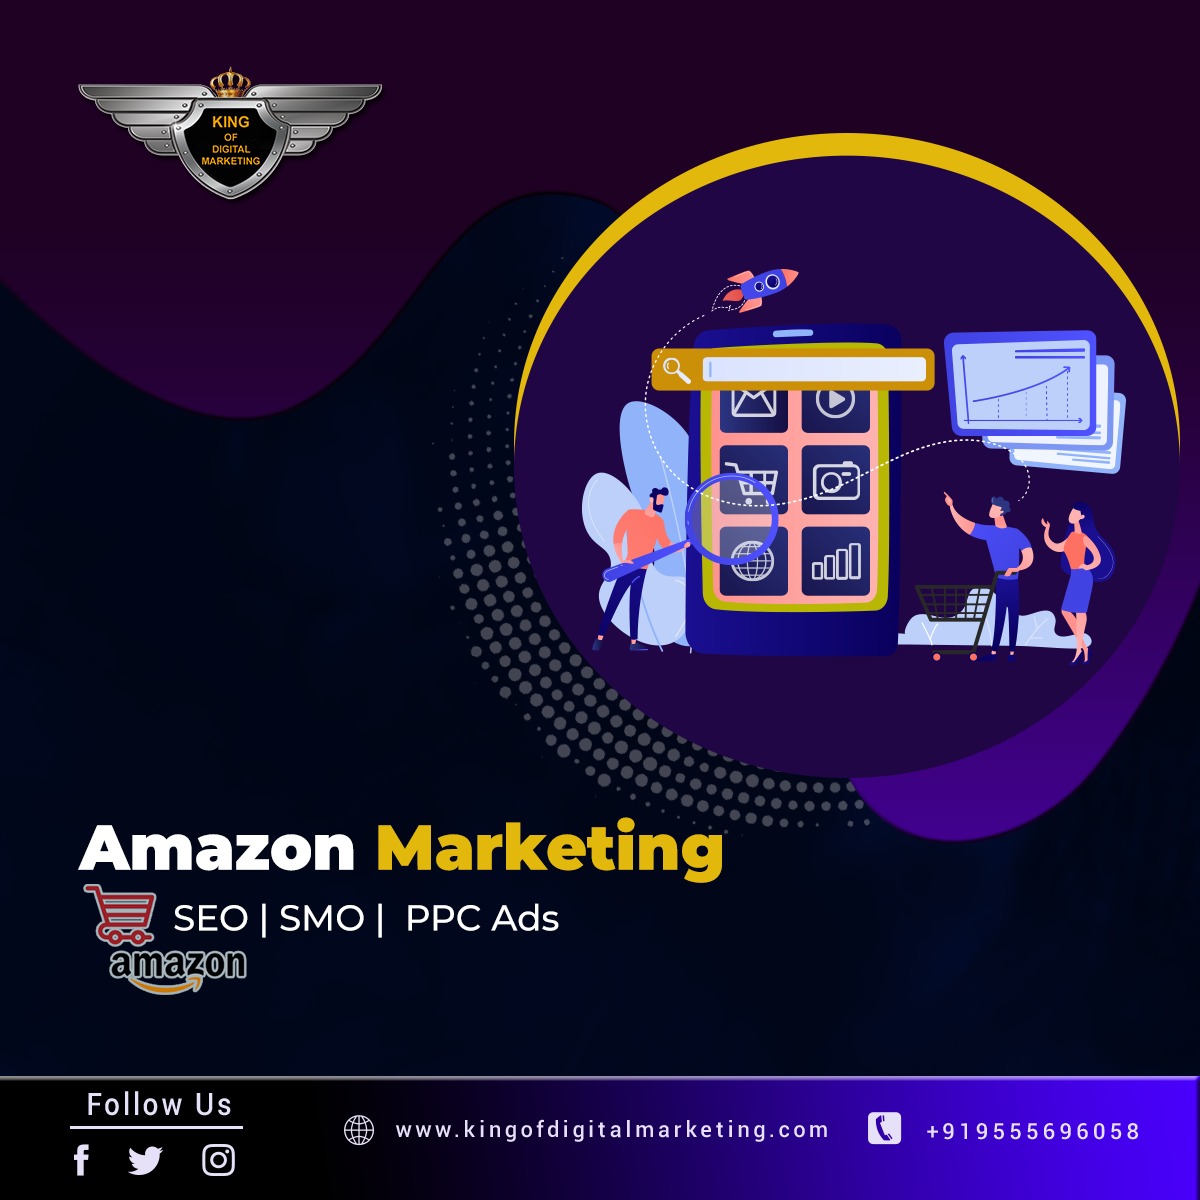 Amazon Advertising Services